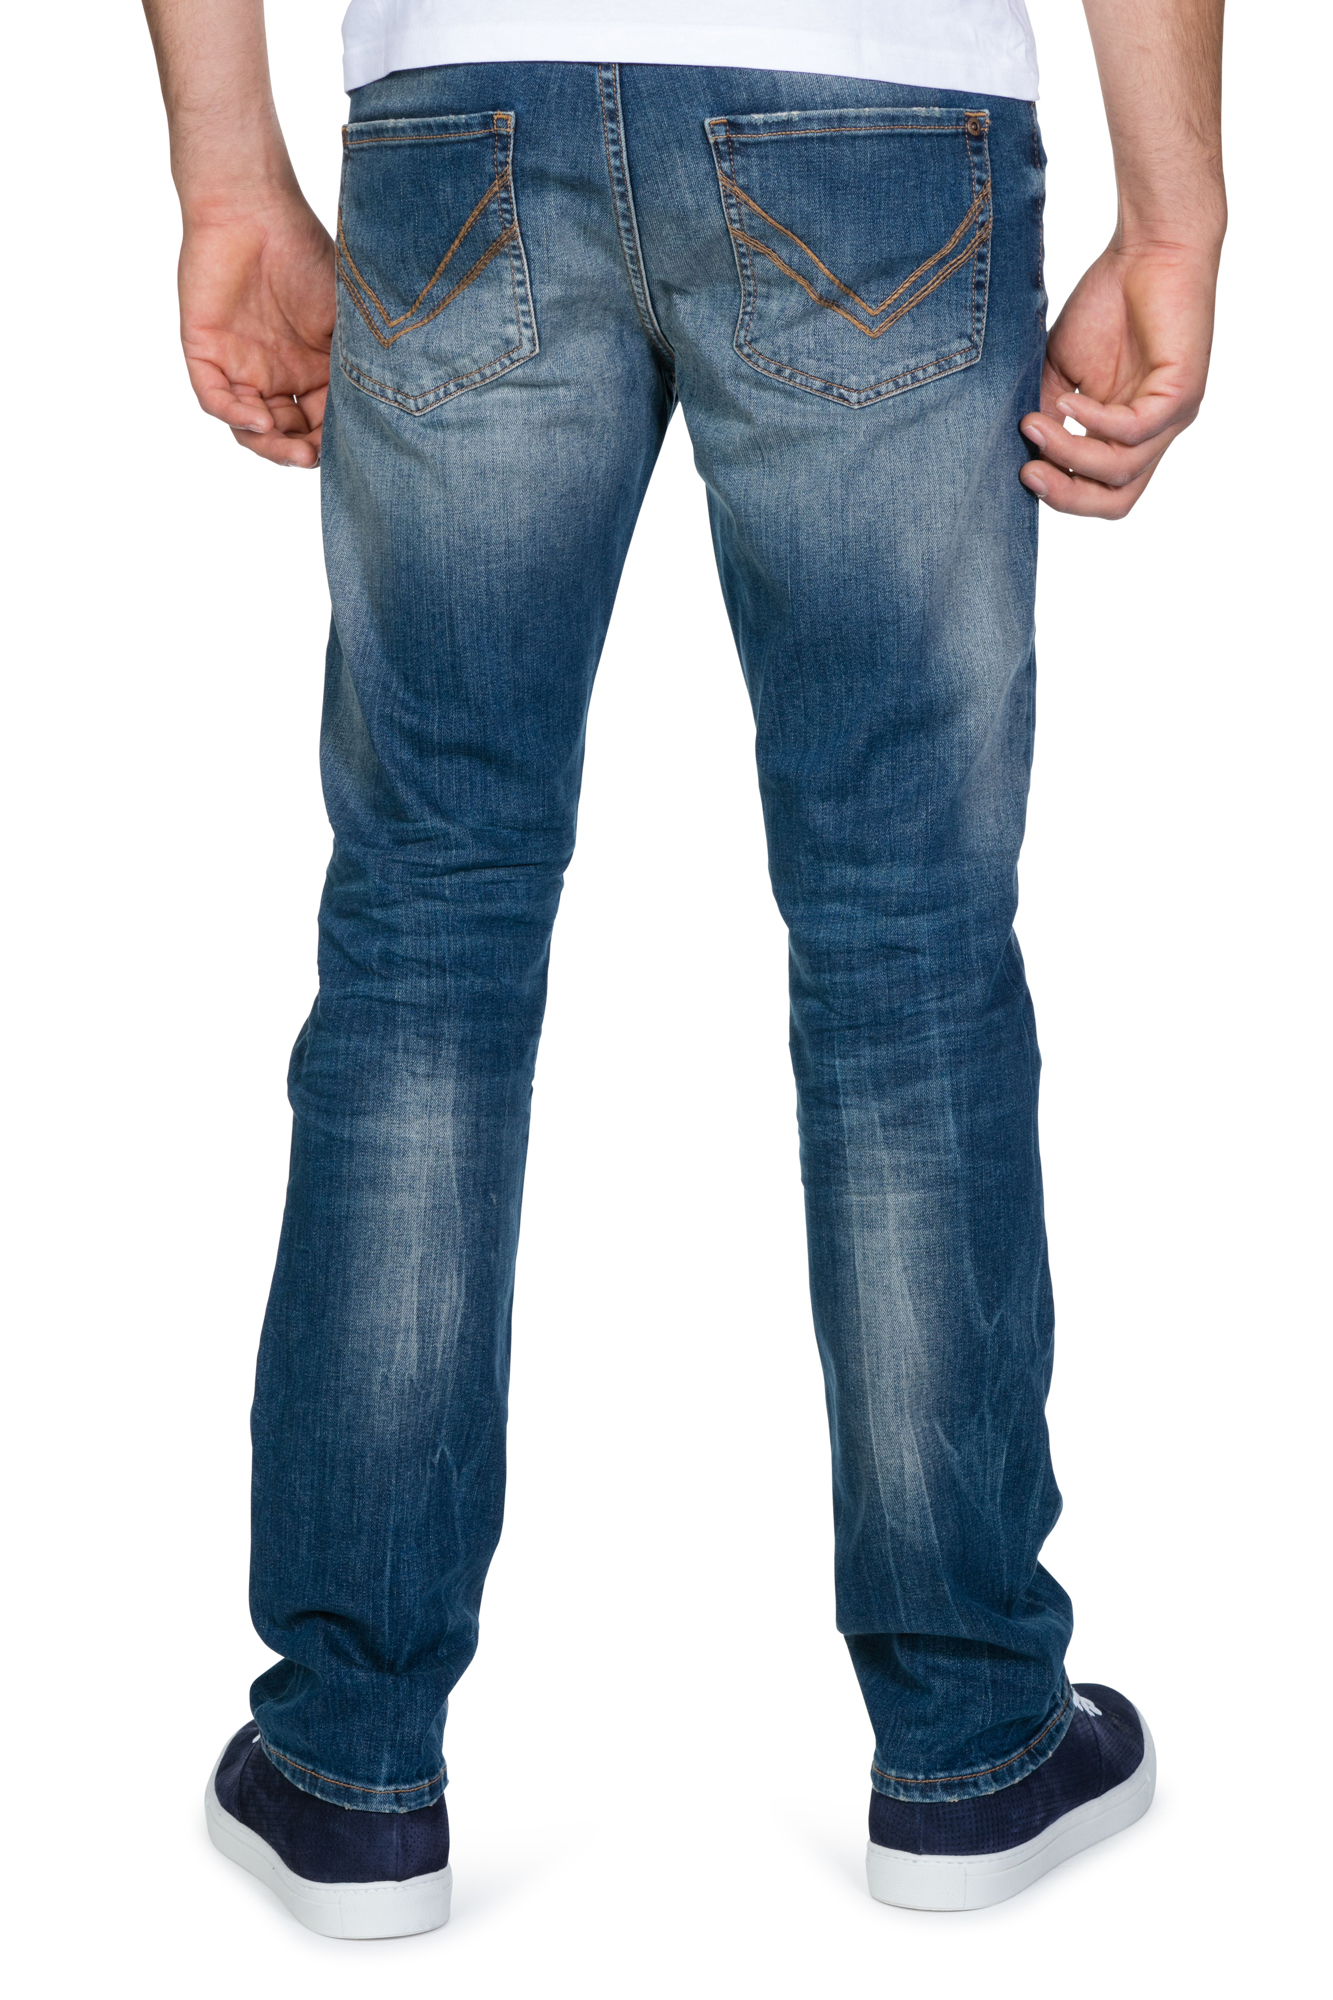 jeans_homme_redman_noah_denim_dirty_3.jpg